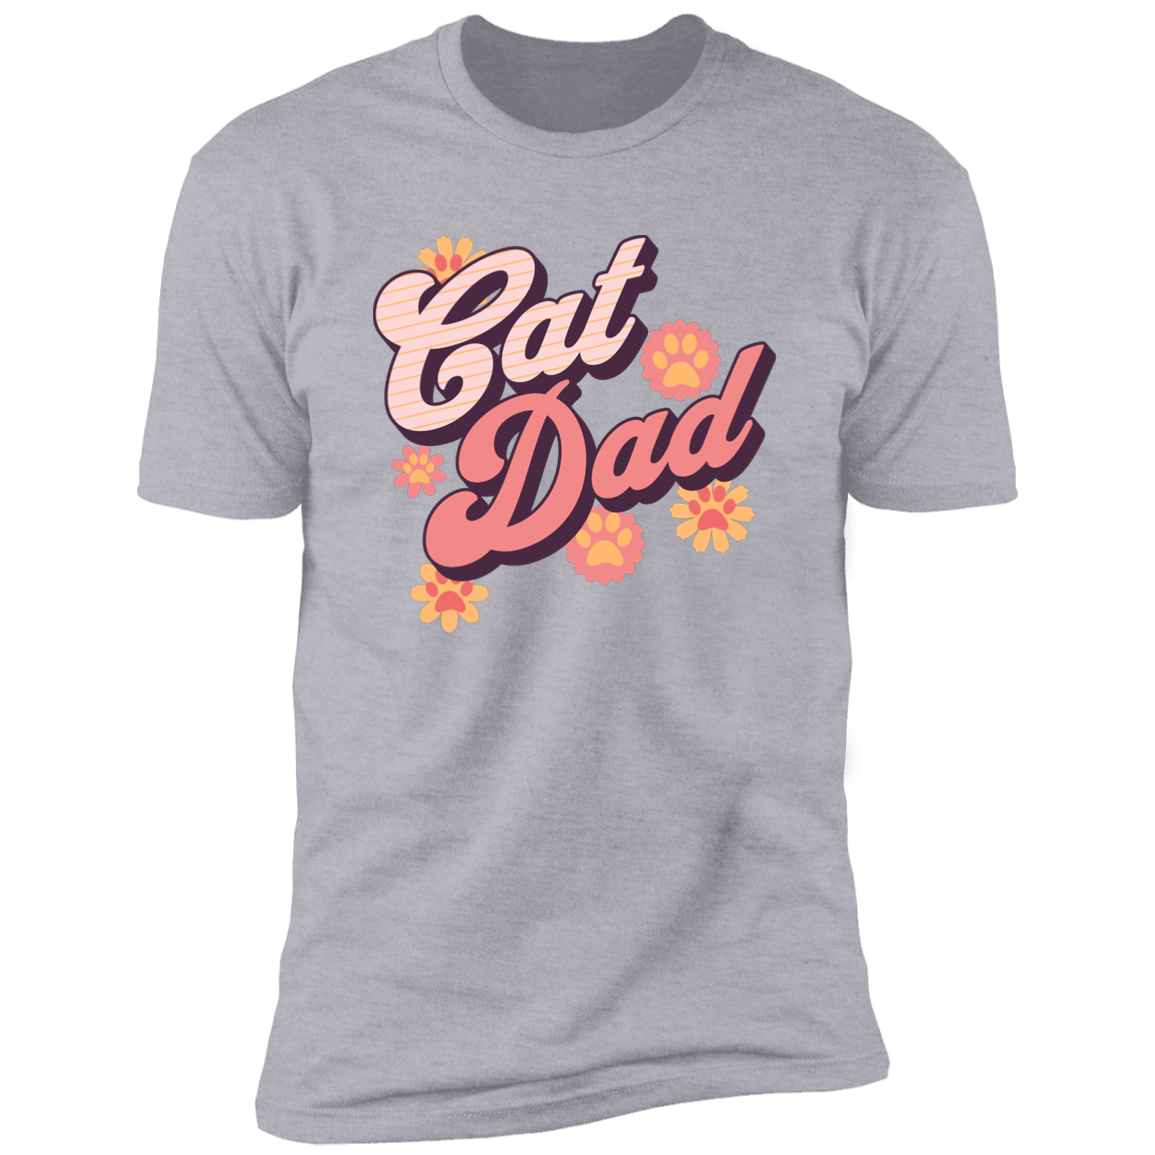 Cat Dad Retro T-shirt, Cat shirt for humans, retro cat dad t-shirt, in light heather gray